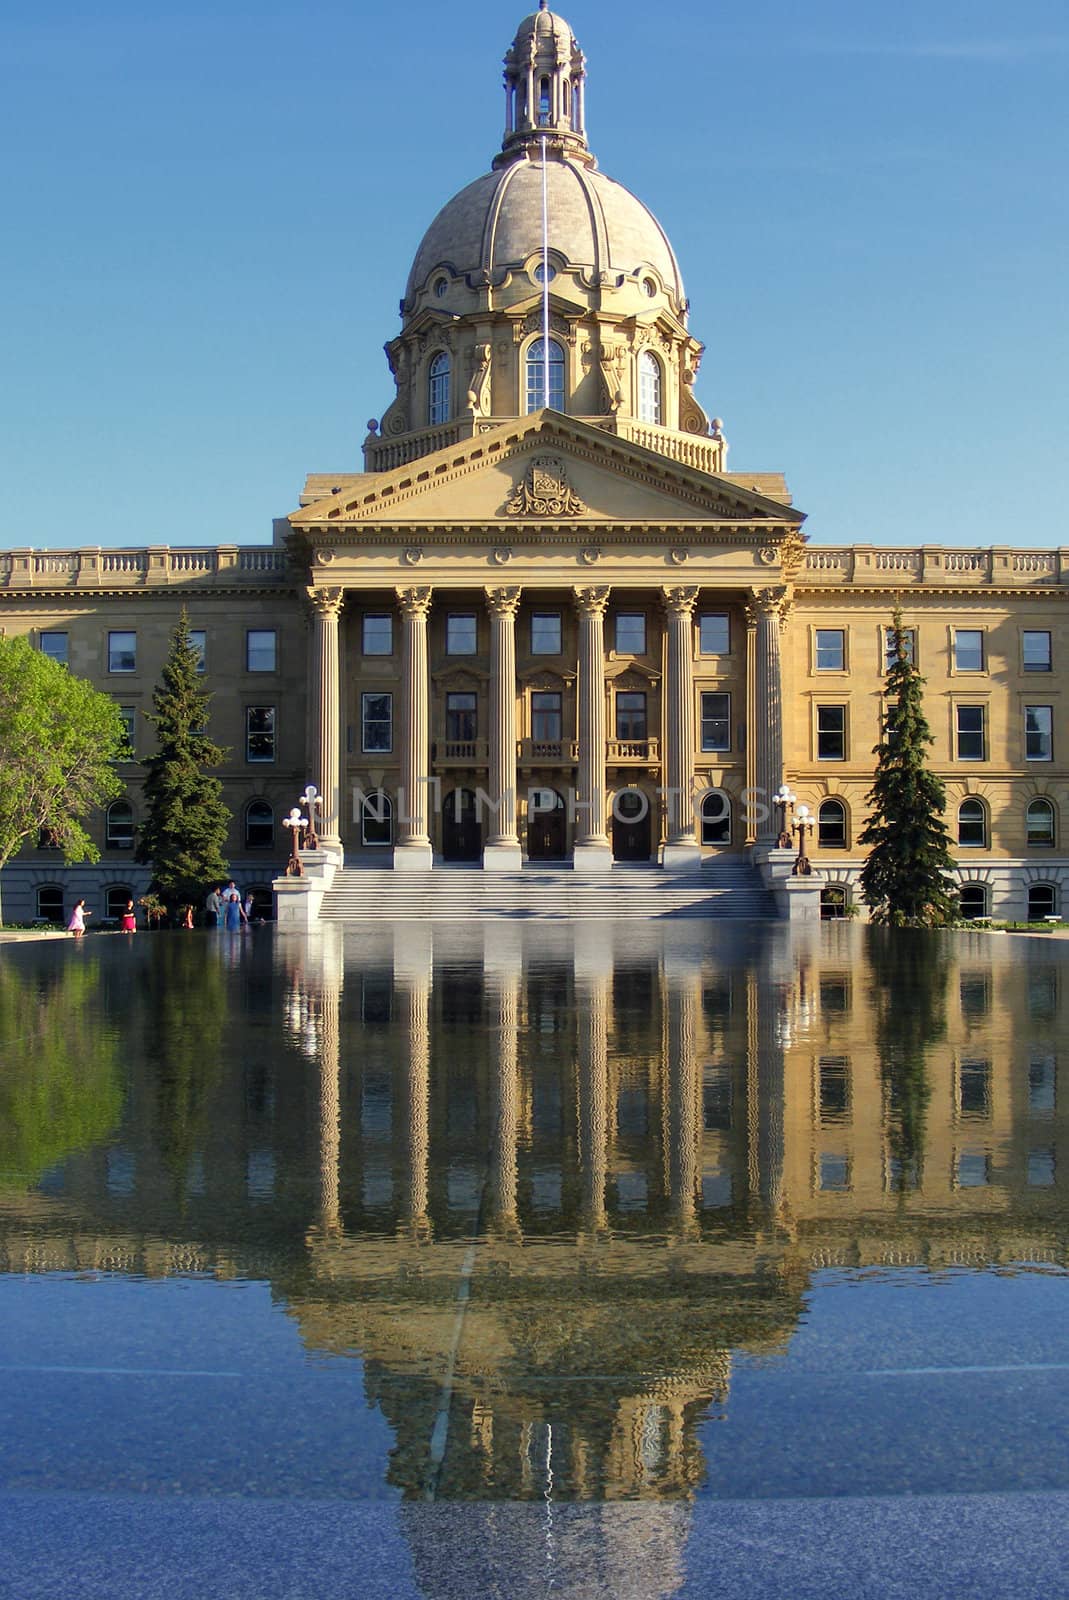 A mirror image of the Legislature building in Edmonton, Alberta, Canada.